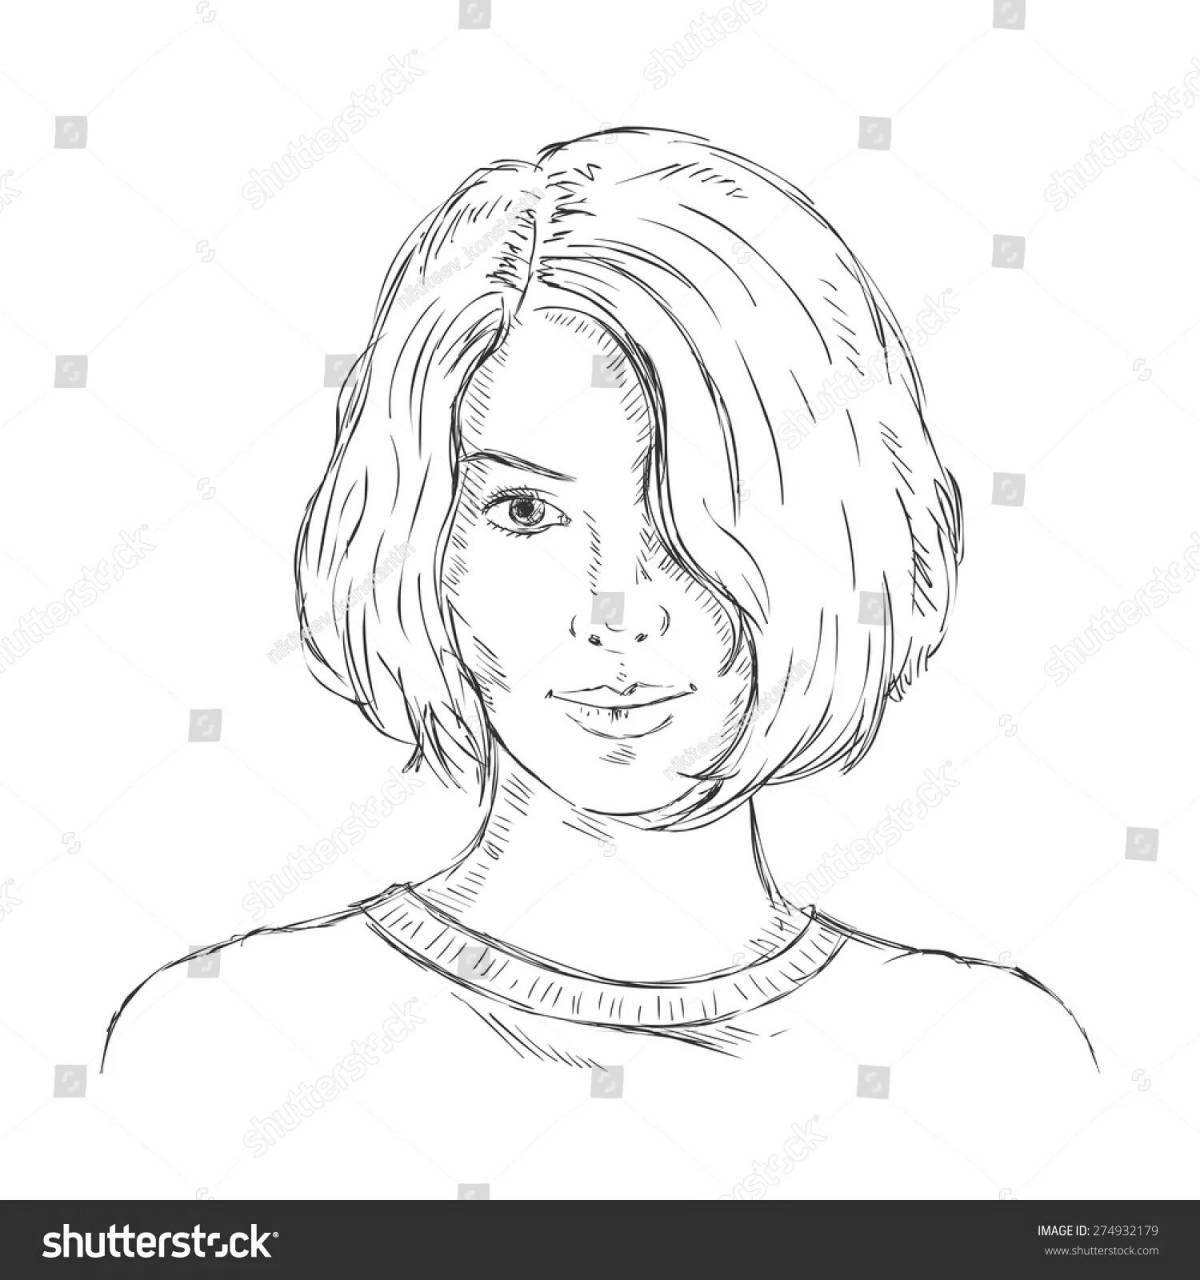 Serendipitous coloring page портрет девушки с лицом